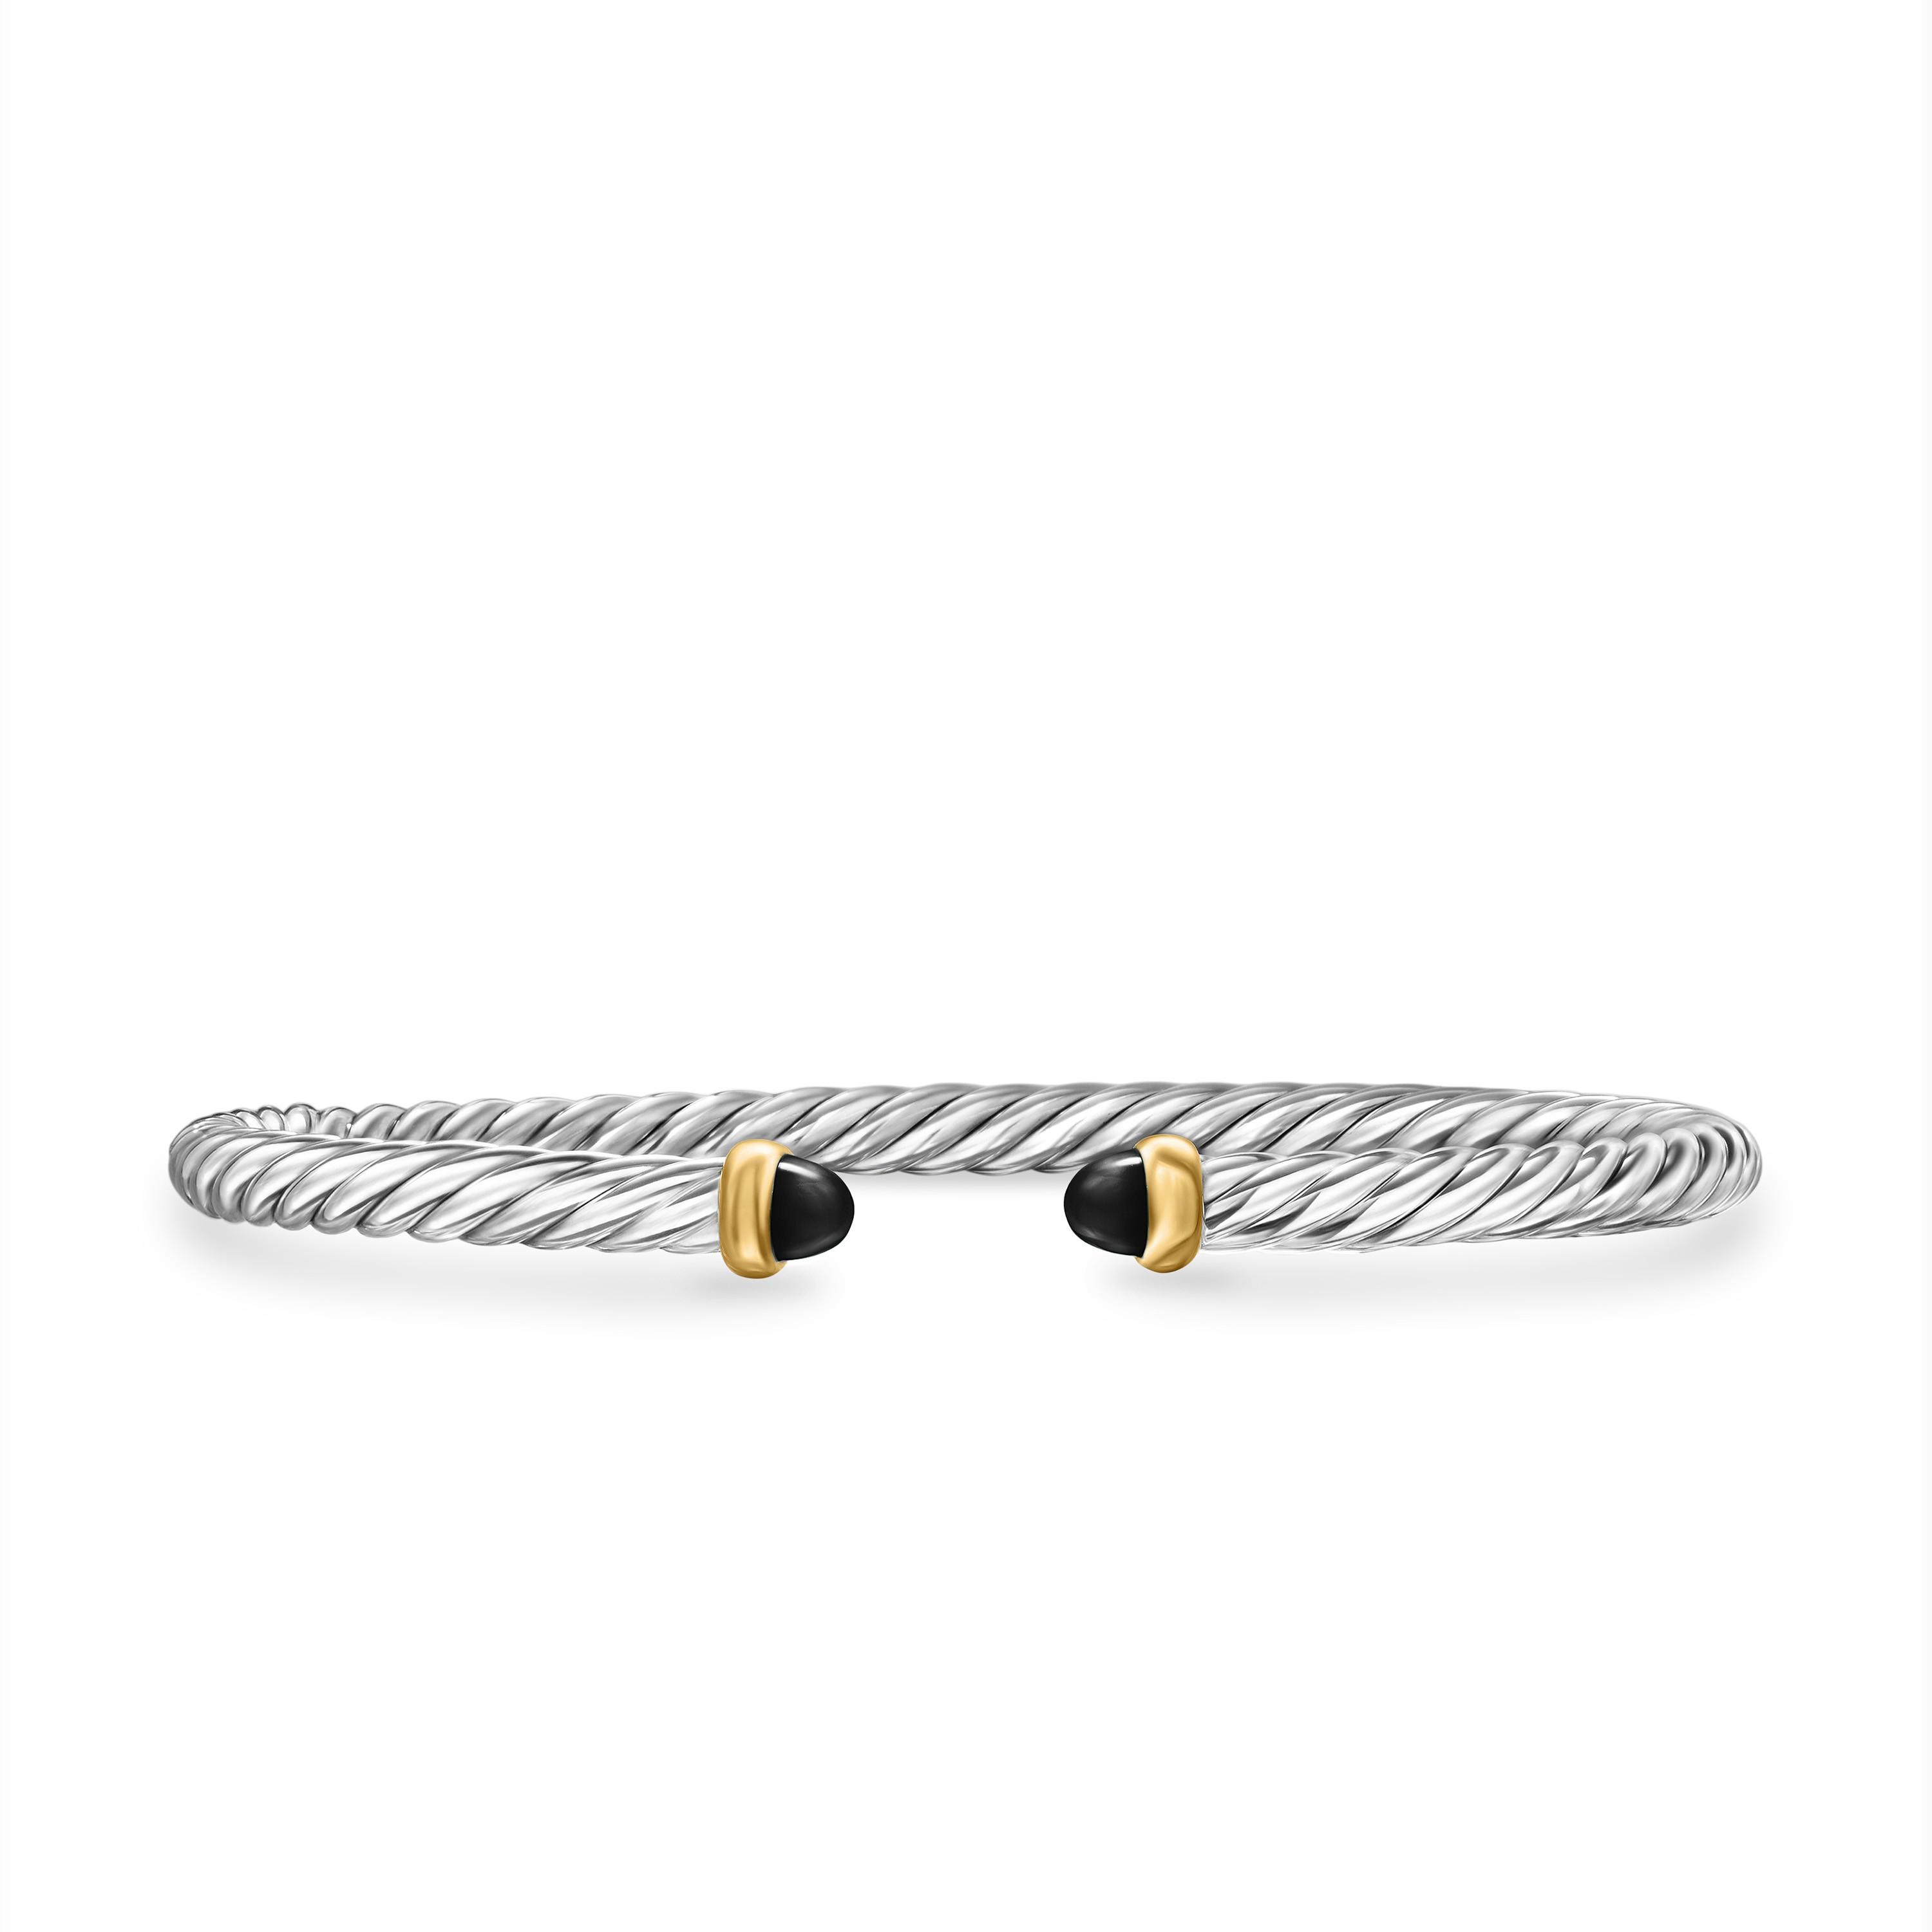 David Yurman Cable Flex Sterling Silver Bracelet with Black Onyx, Size Medium